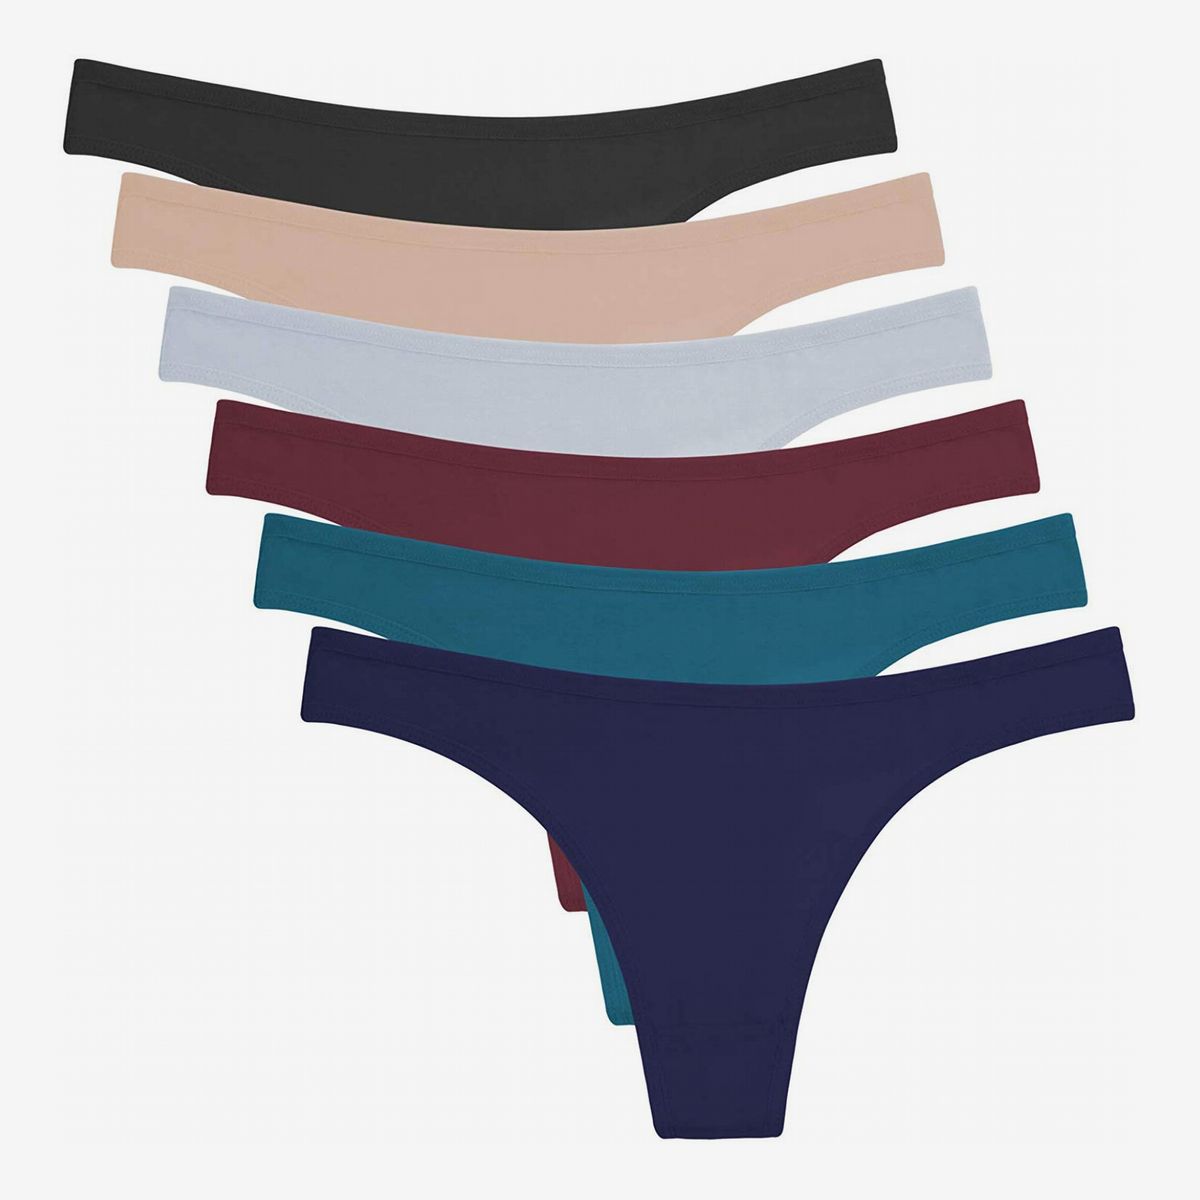 ASTEORRA Womens Underwear Panties Ladies Knickers Cotton Underwear for Women Multipack S M L XL XXL 